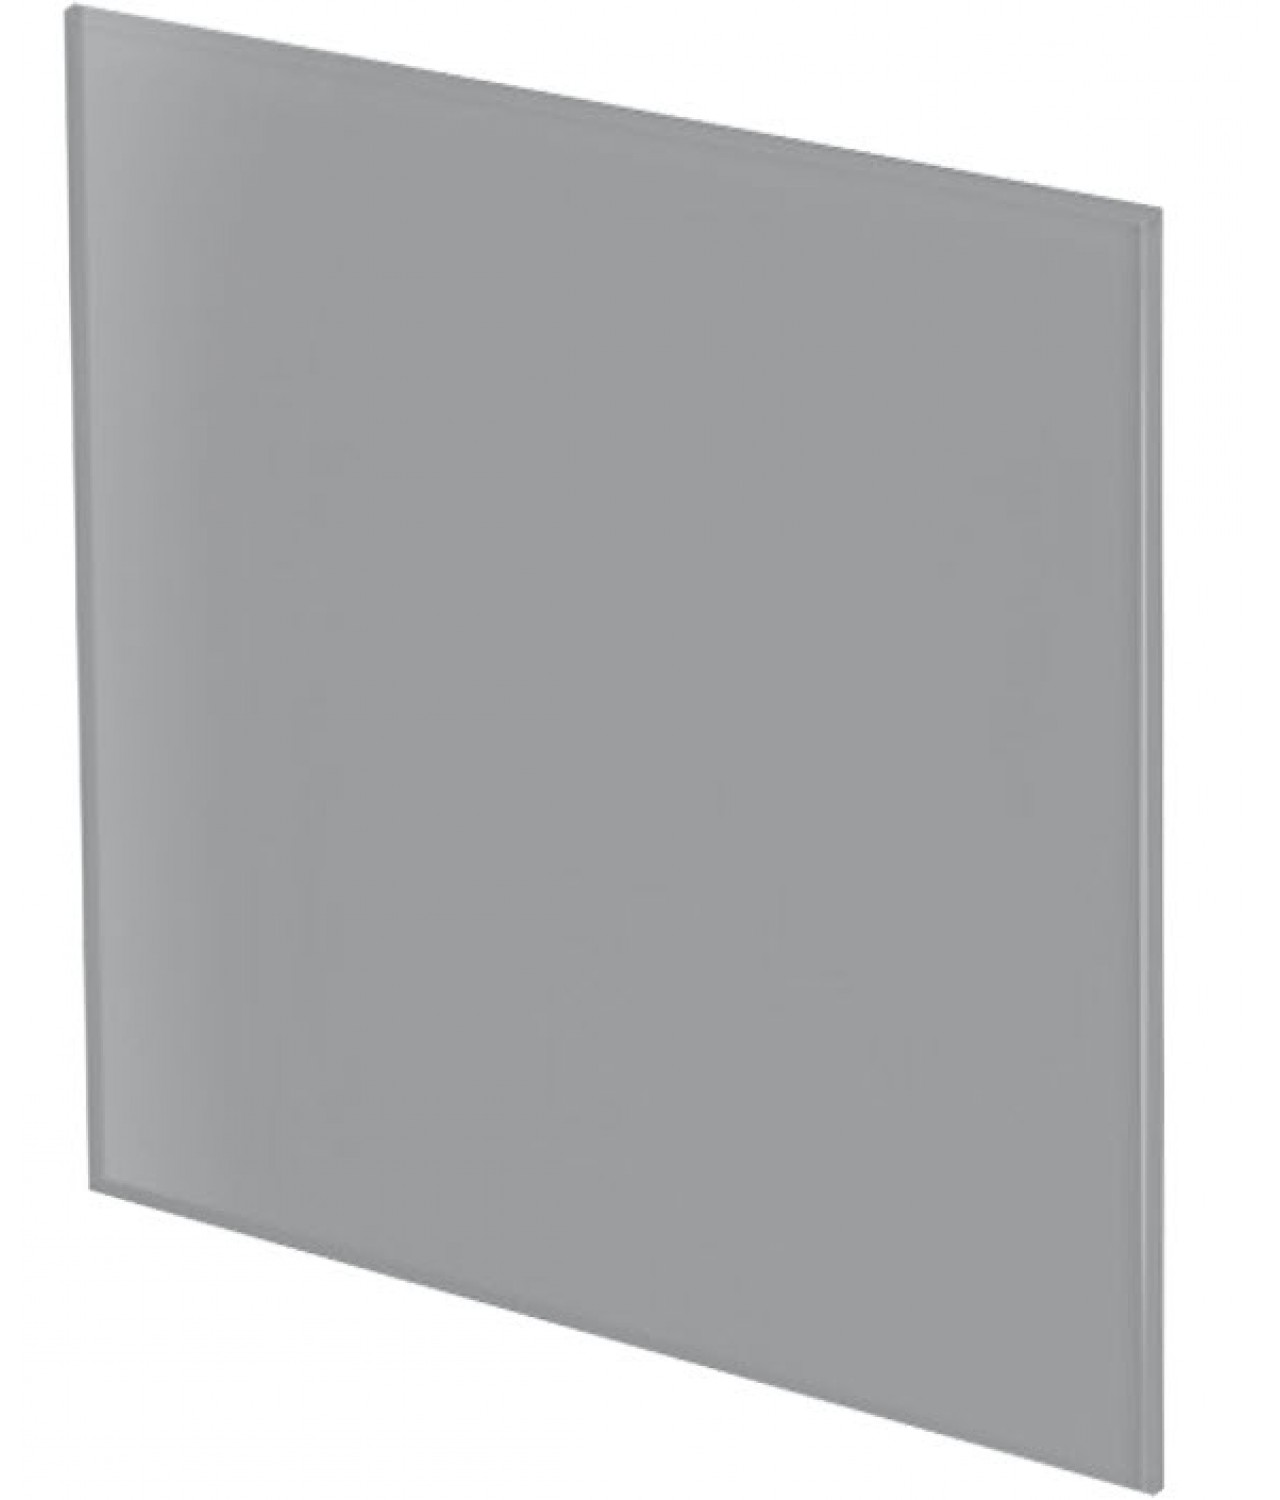 Interior panel PTGG100M - TRAX GLASS grey matte